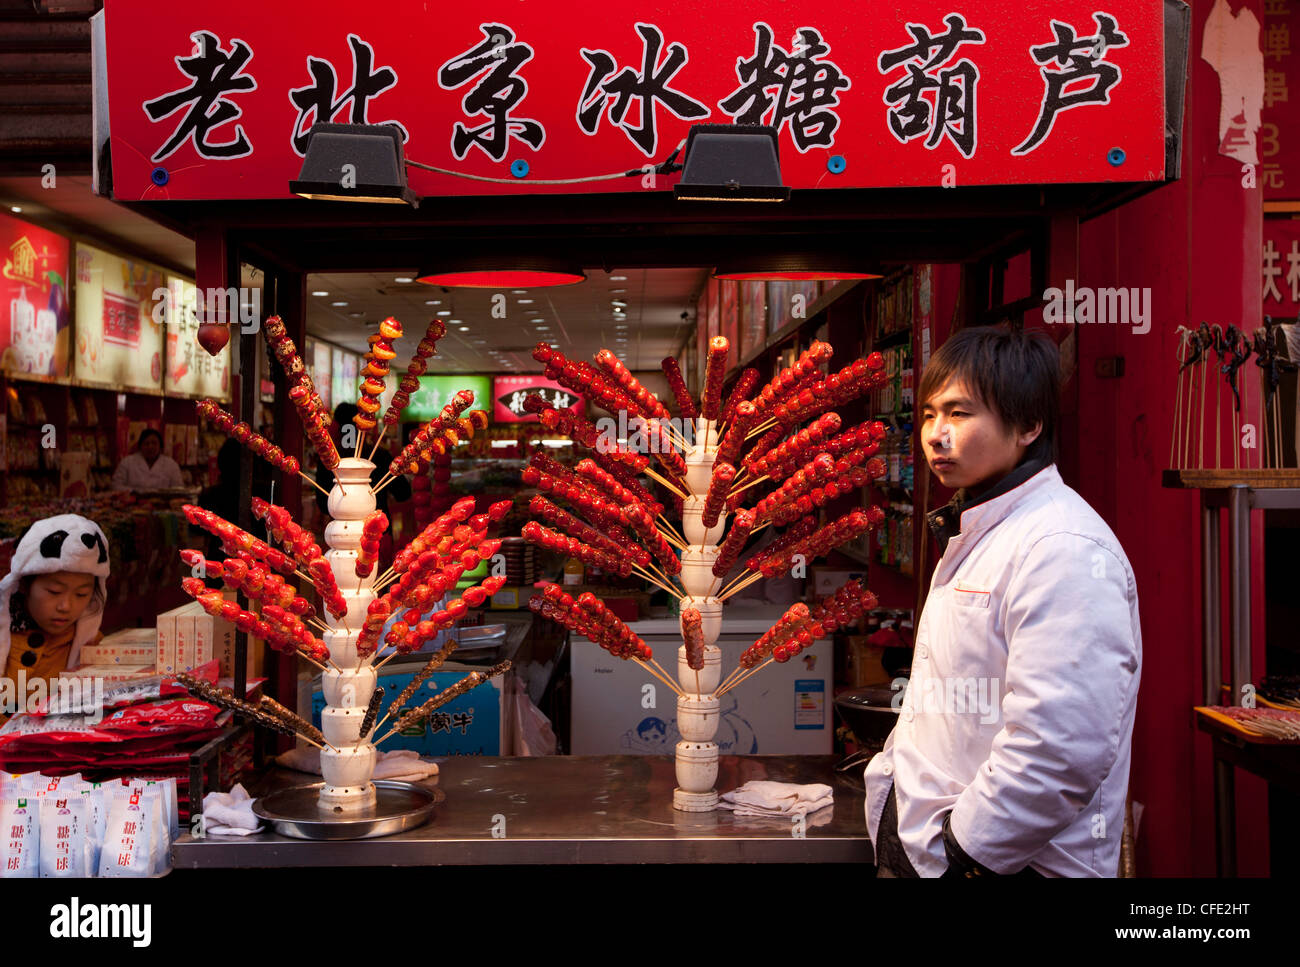 Chinese food, Wangfujing Snack Street, Beijing China Stock Photo